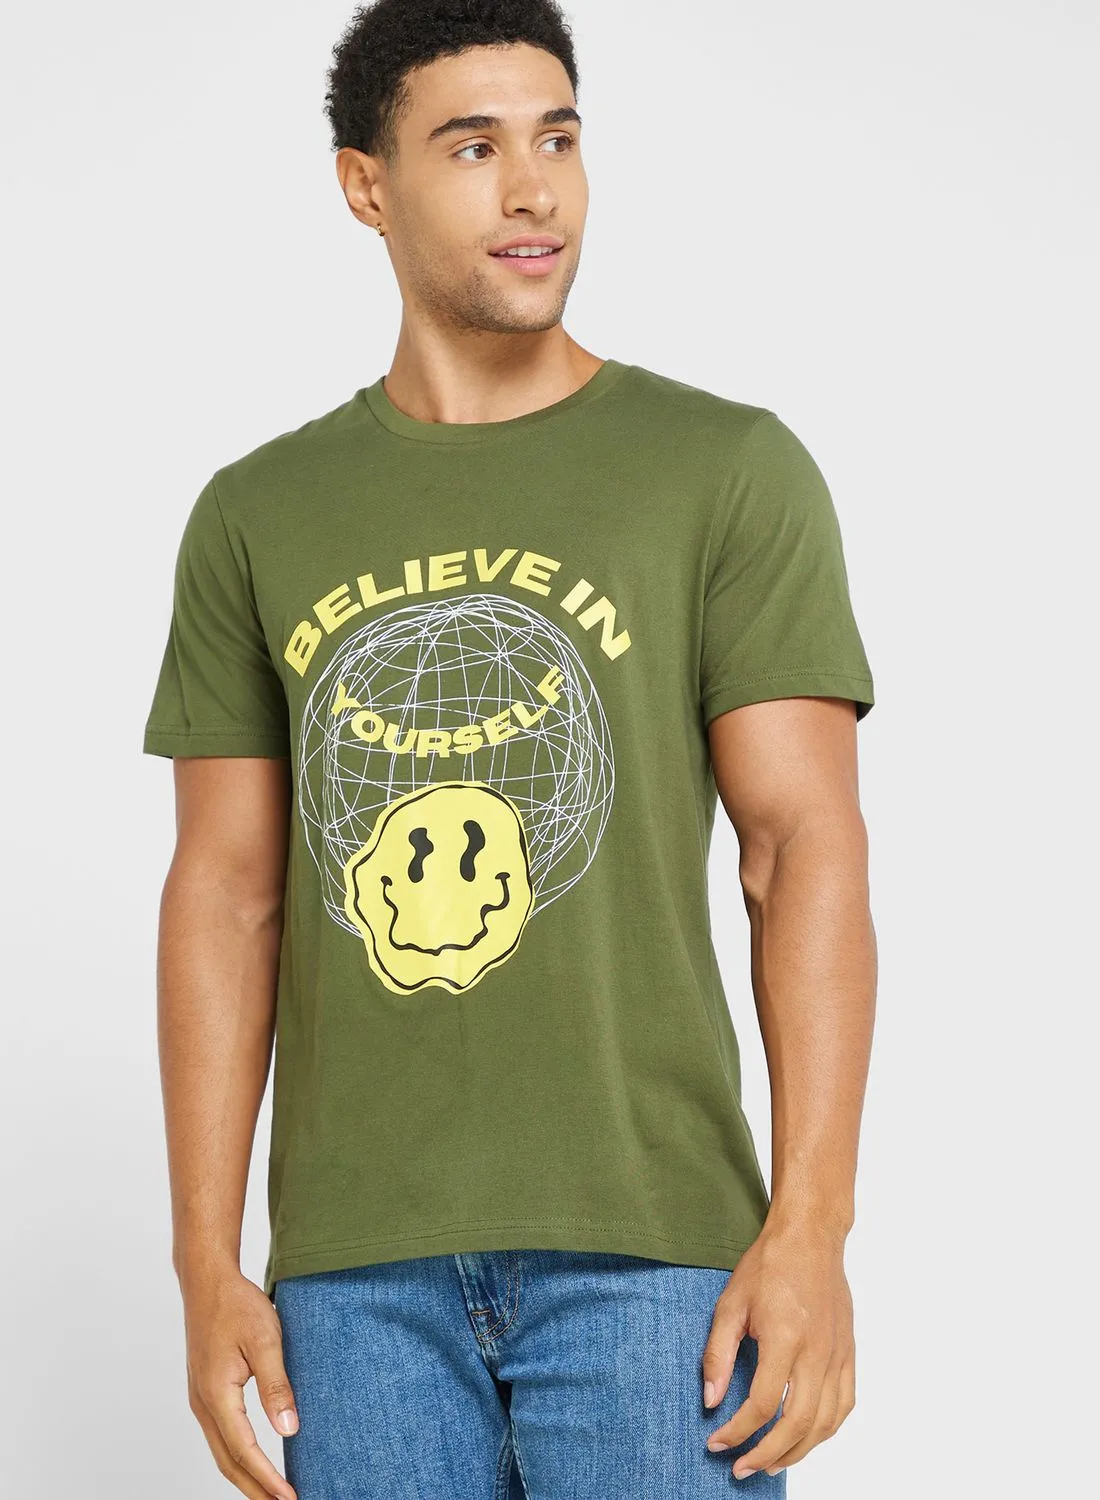 Seventy Five Believe In Yourself T-Shirt